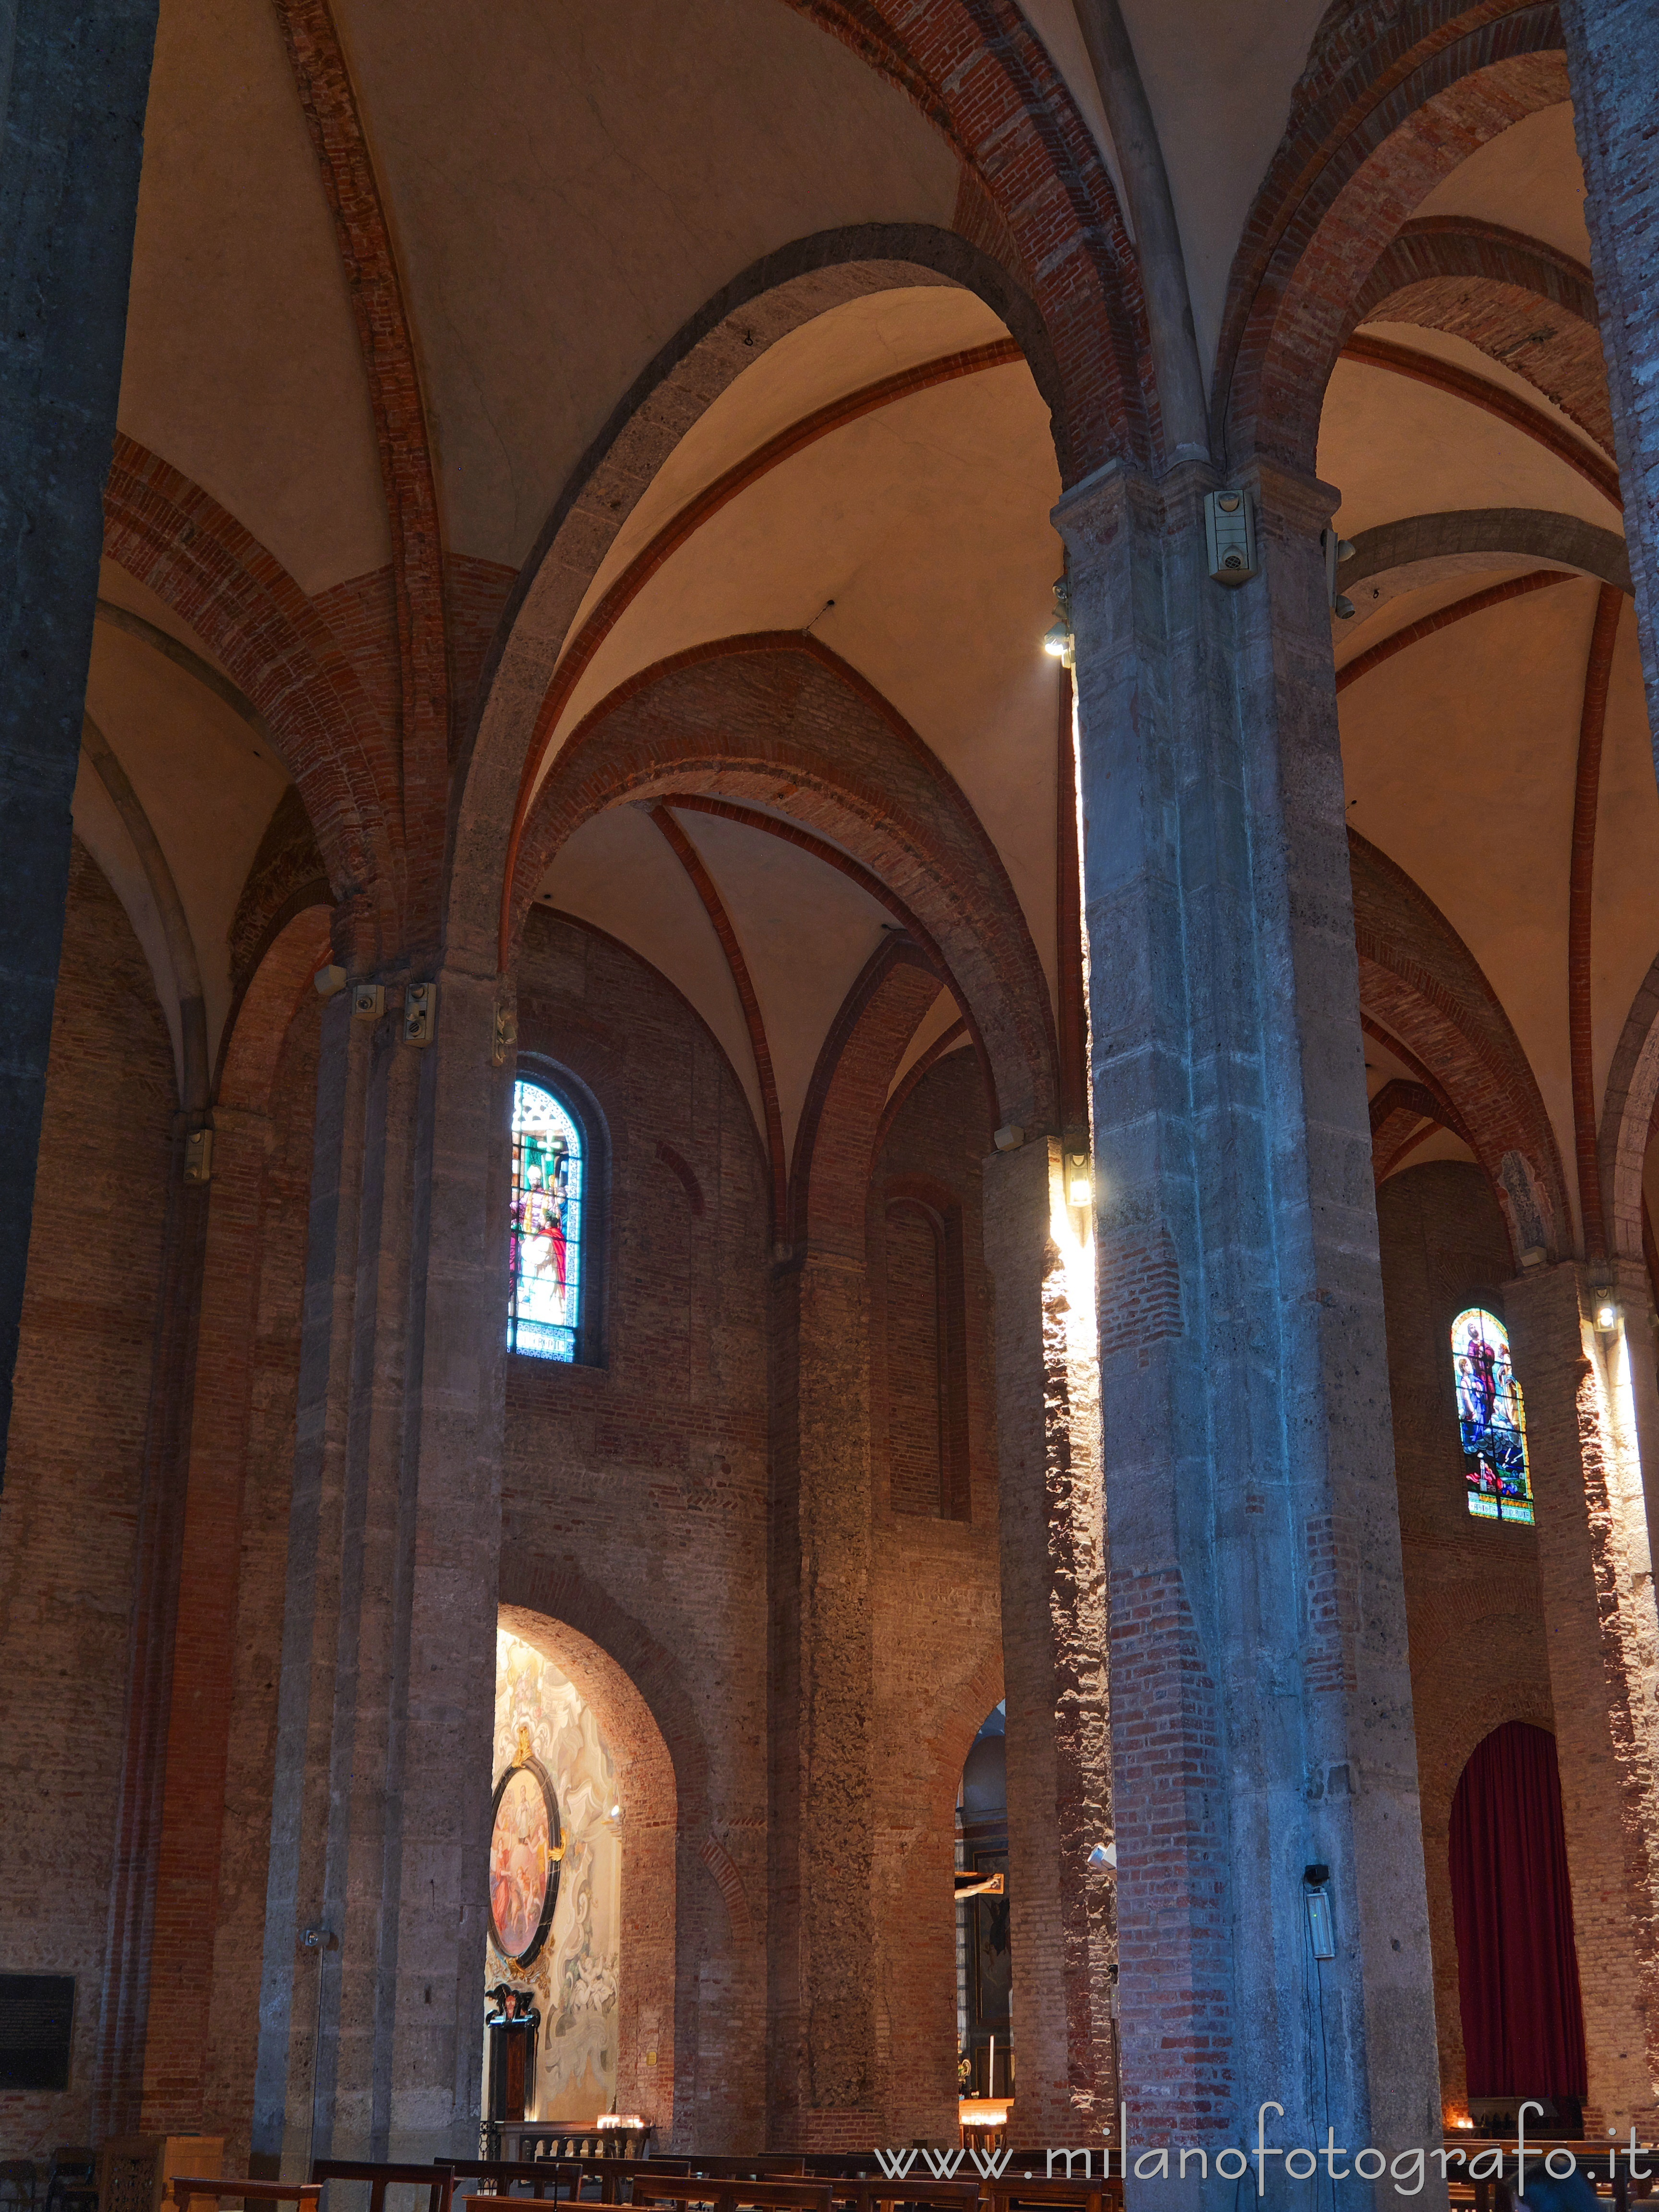 Milan (Italy): Arcades light and shadows in the Basilica of San Simpliciano - Milan (Italy)